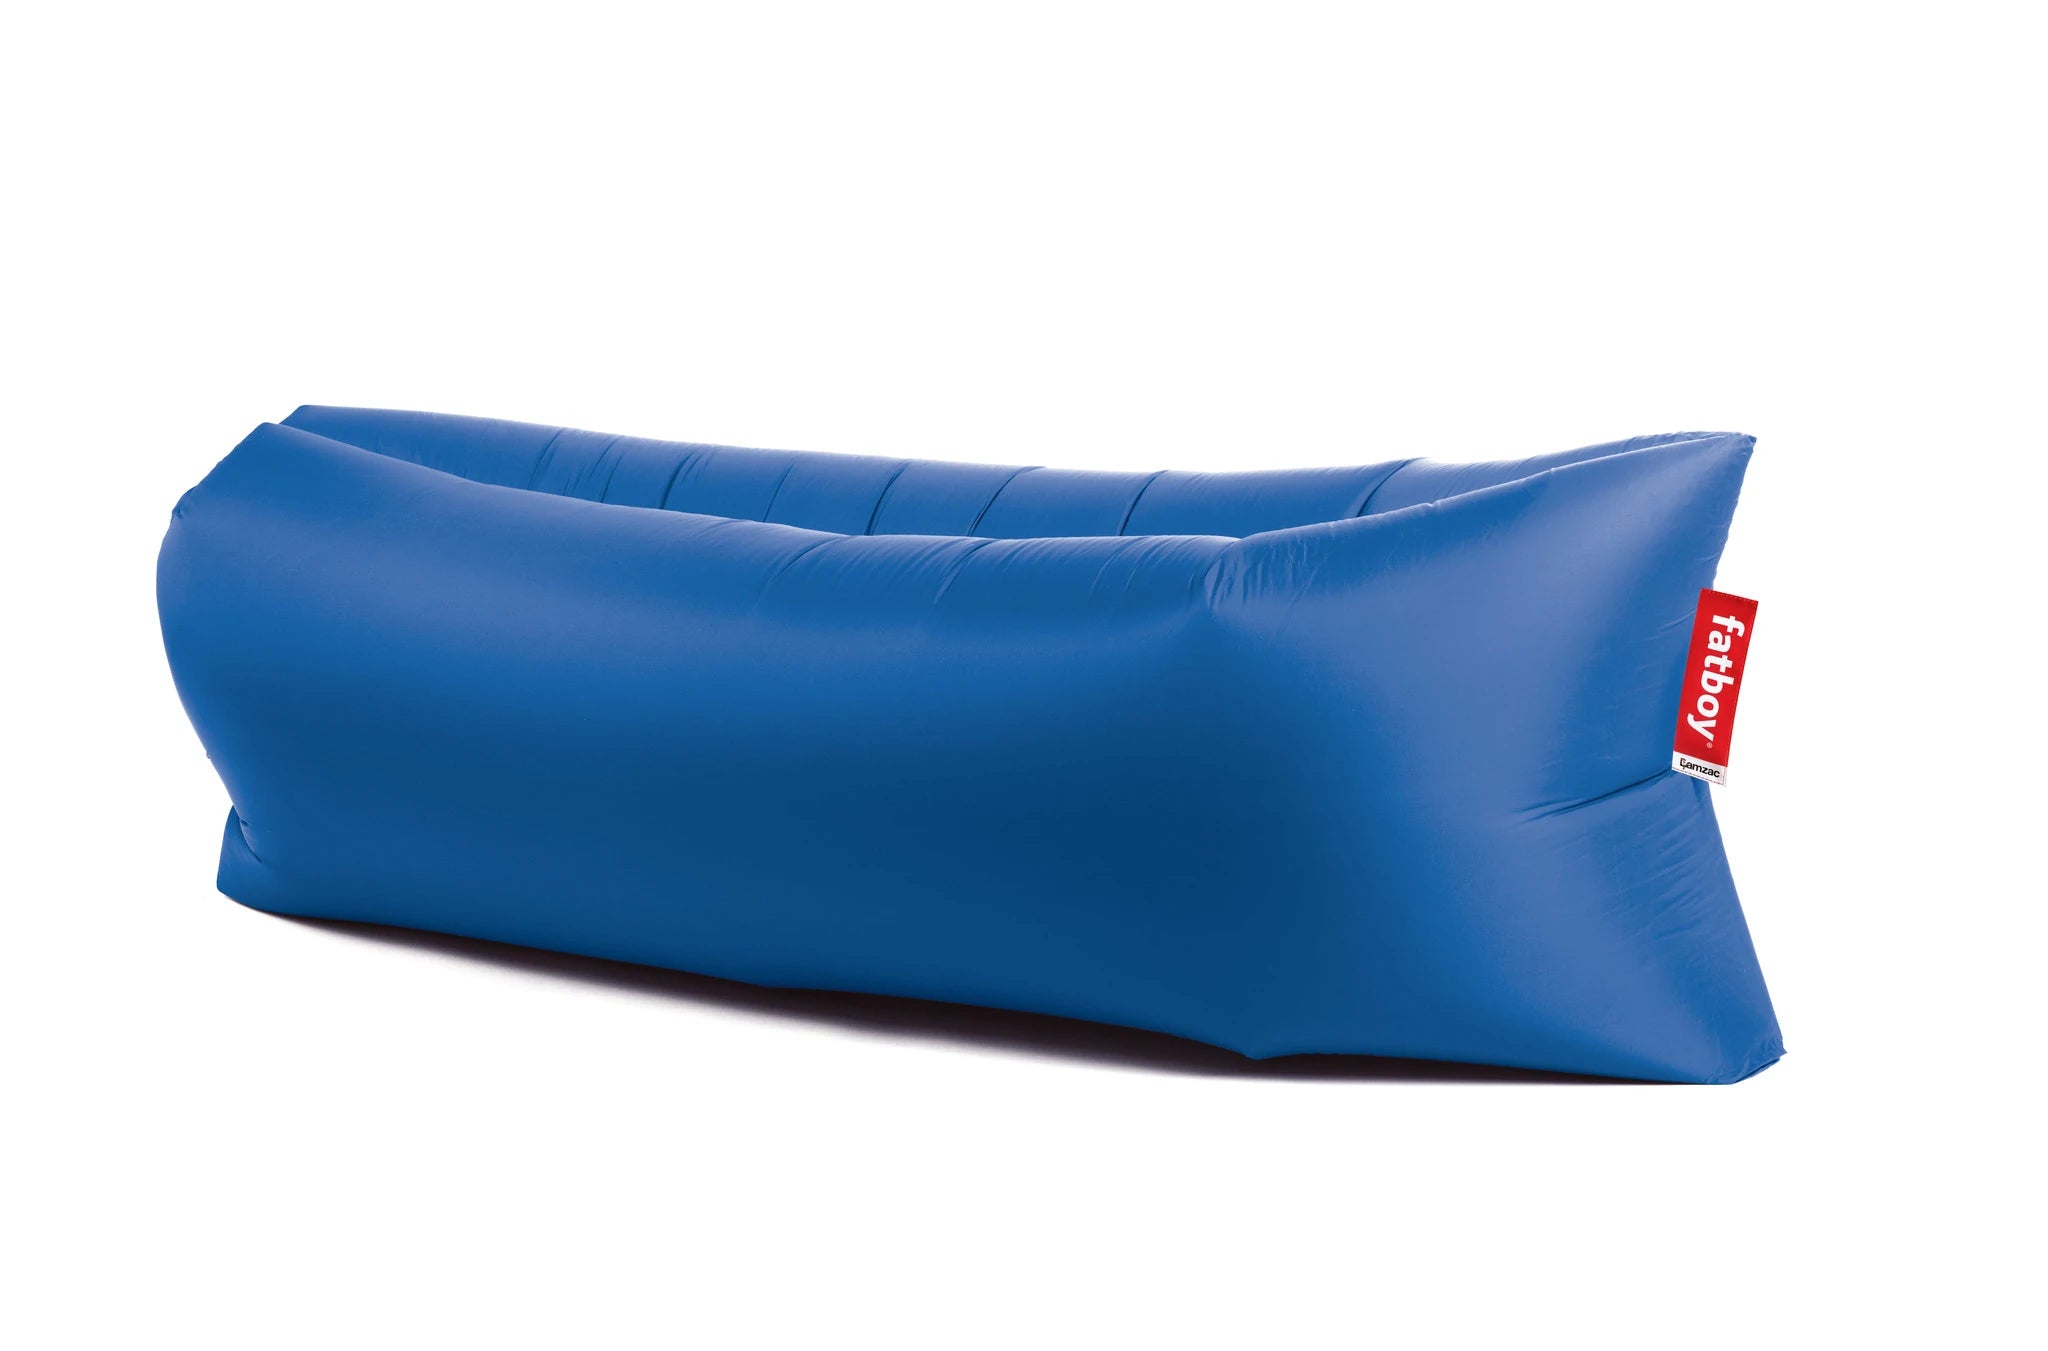 Lamzac 1.0 Inflatable Lounge